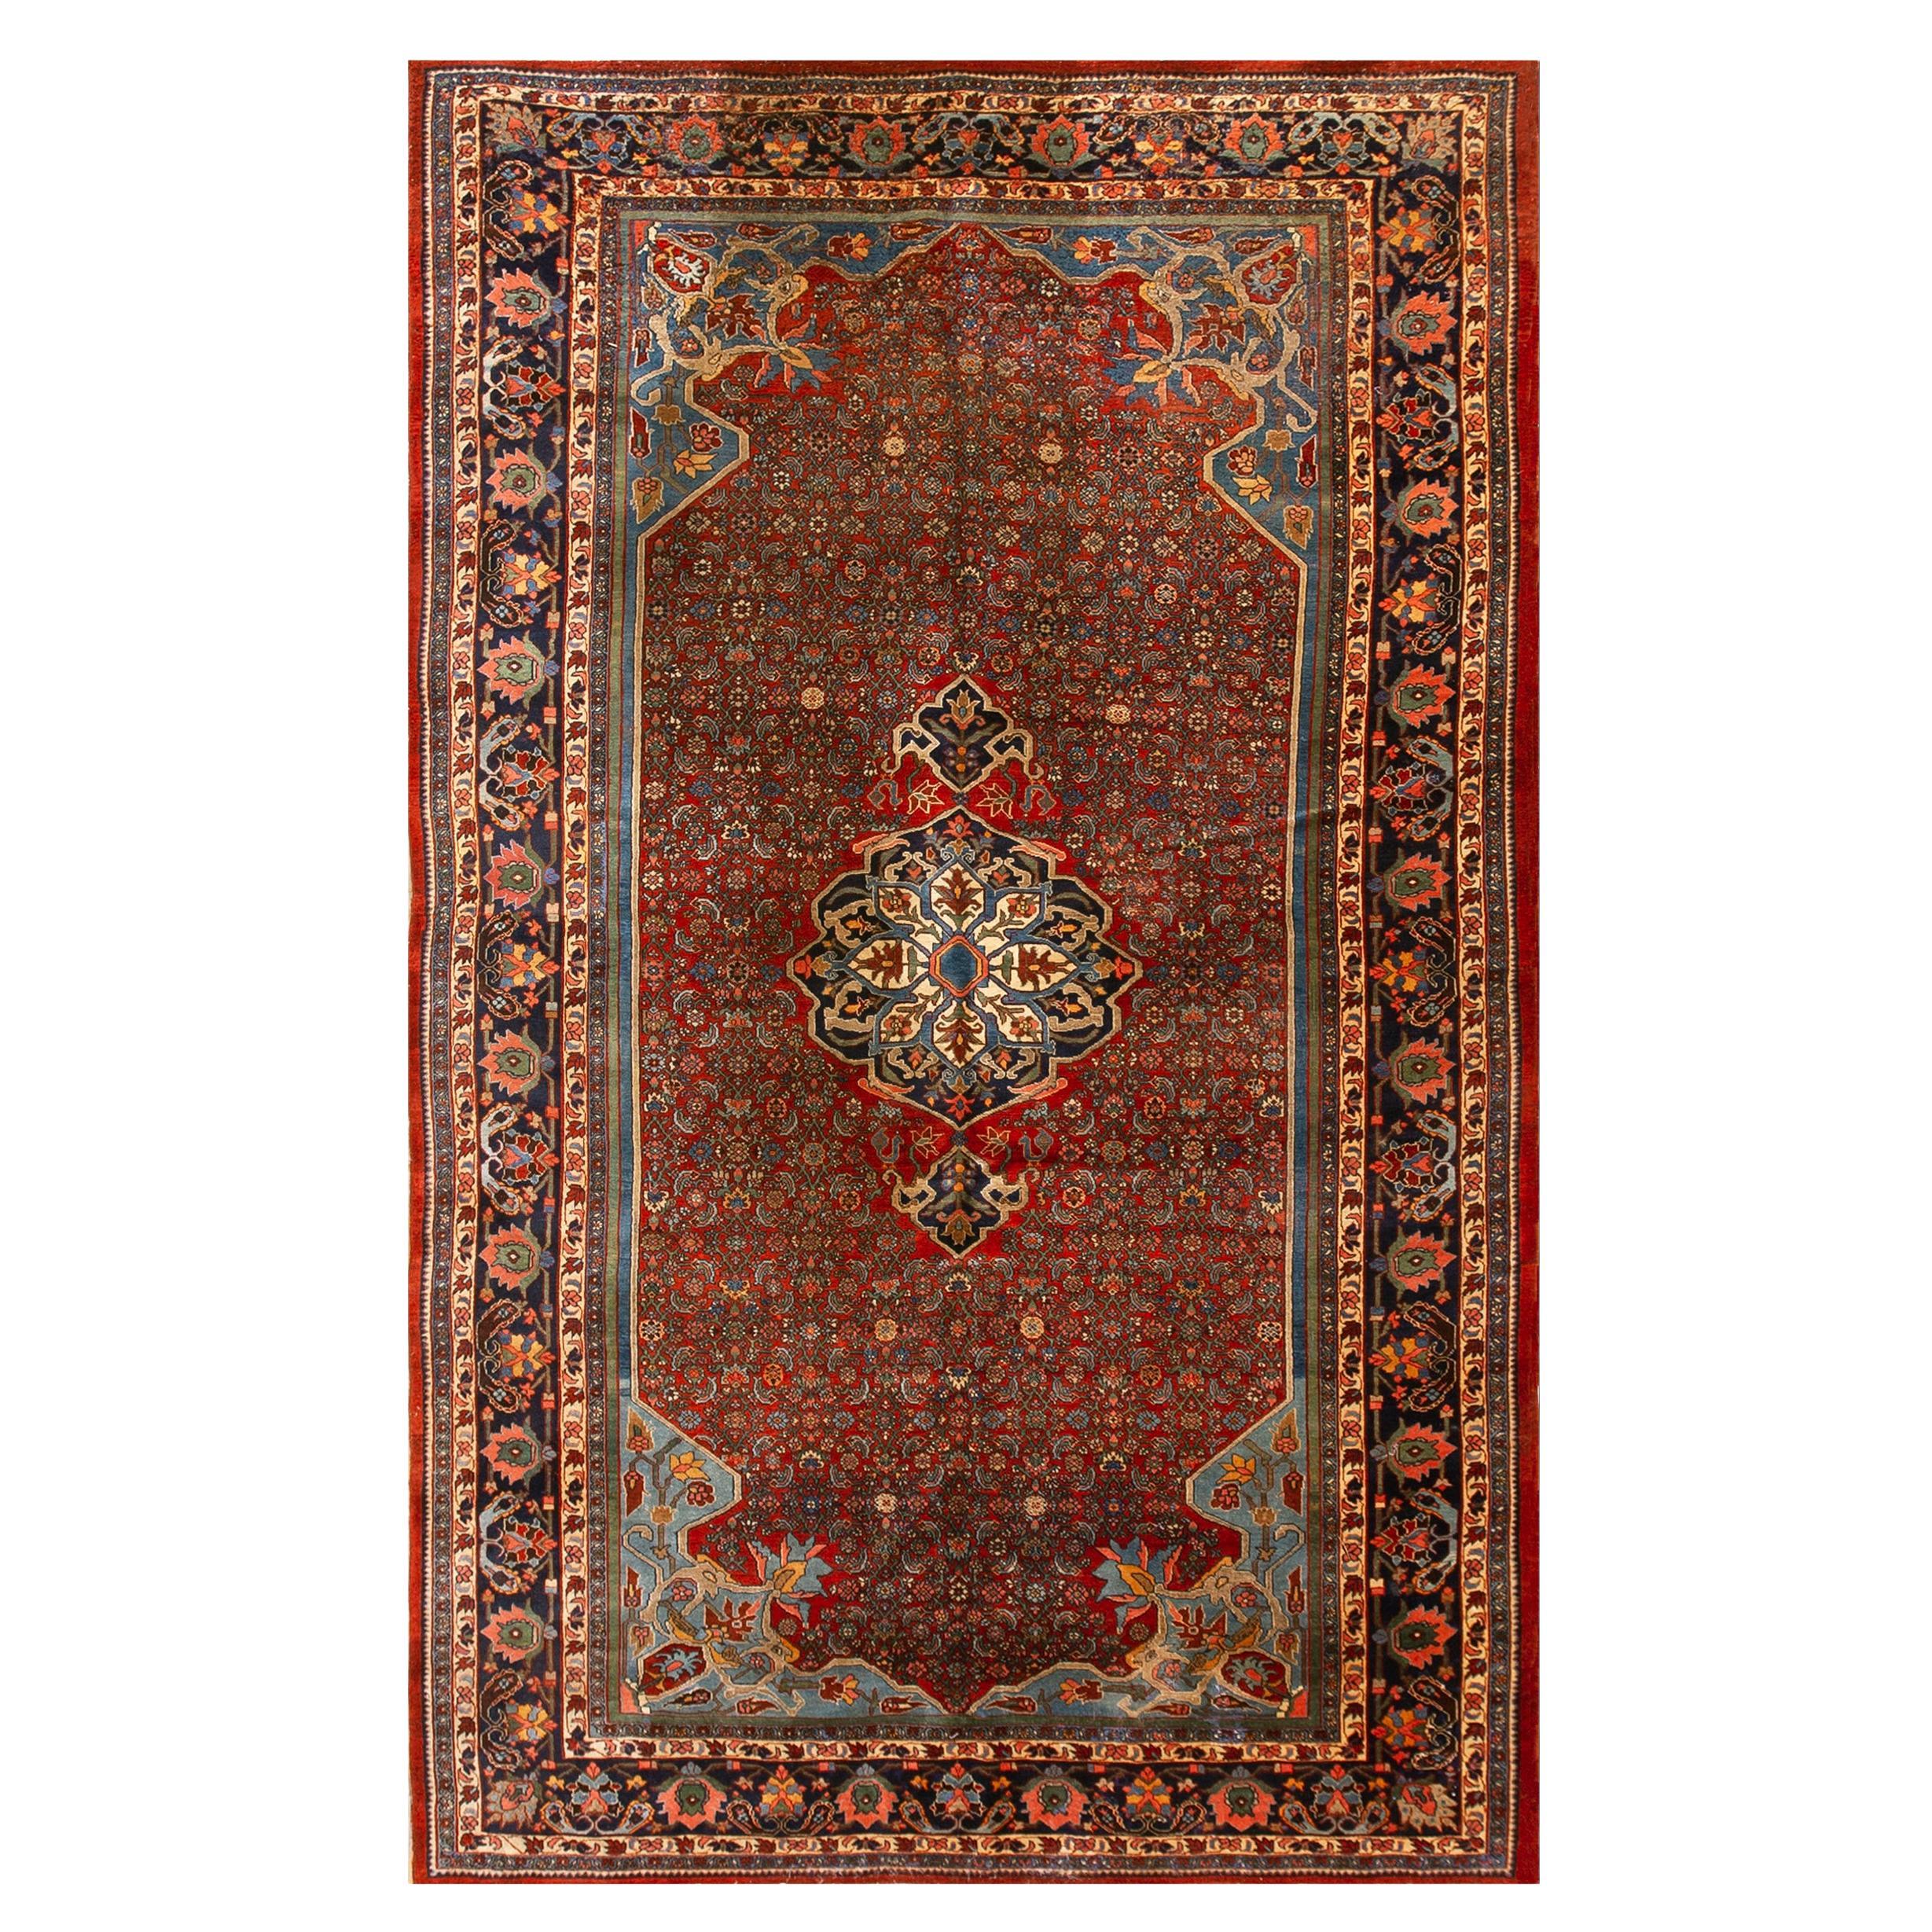 Early 20th Century Persian Bijar Carpet ( 7'6" x 12' - 230 x 365 ) For Sale